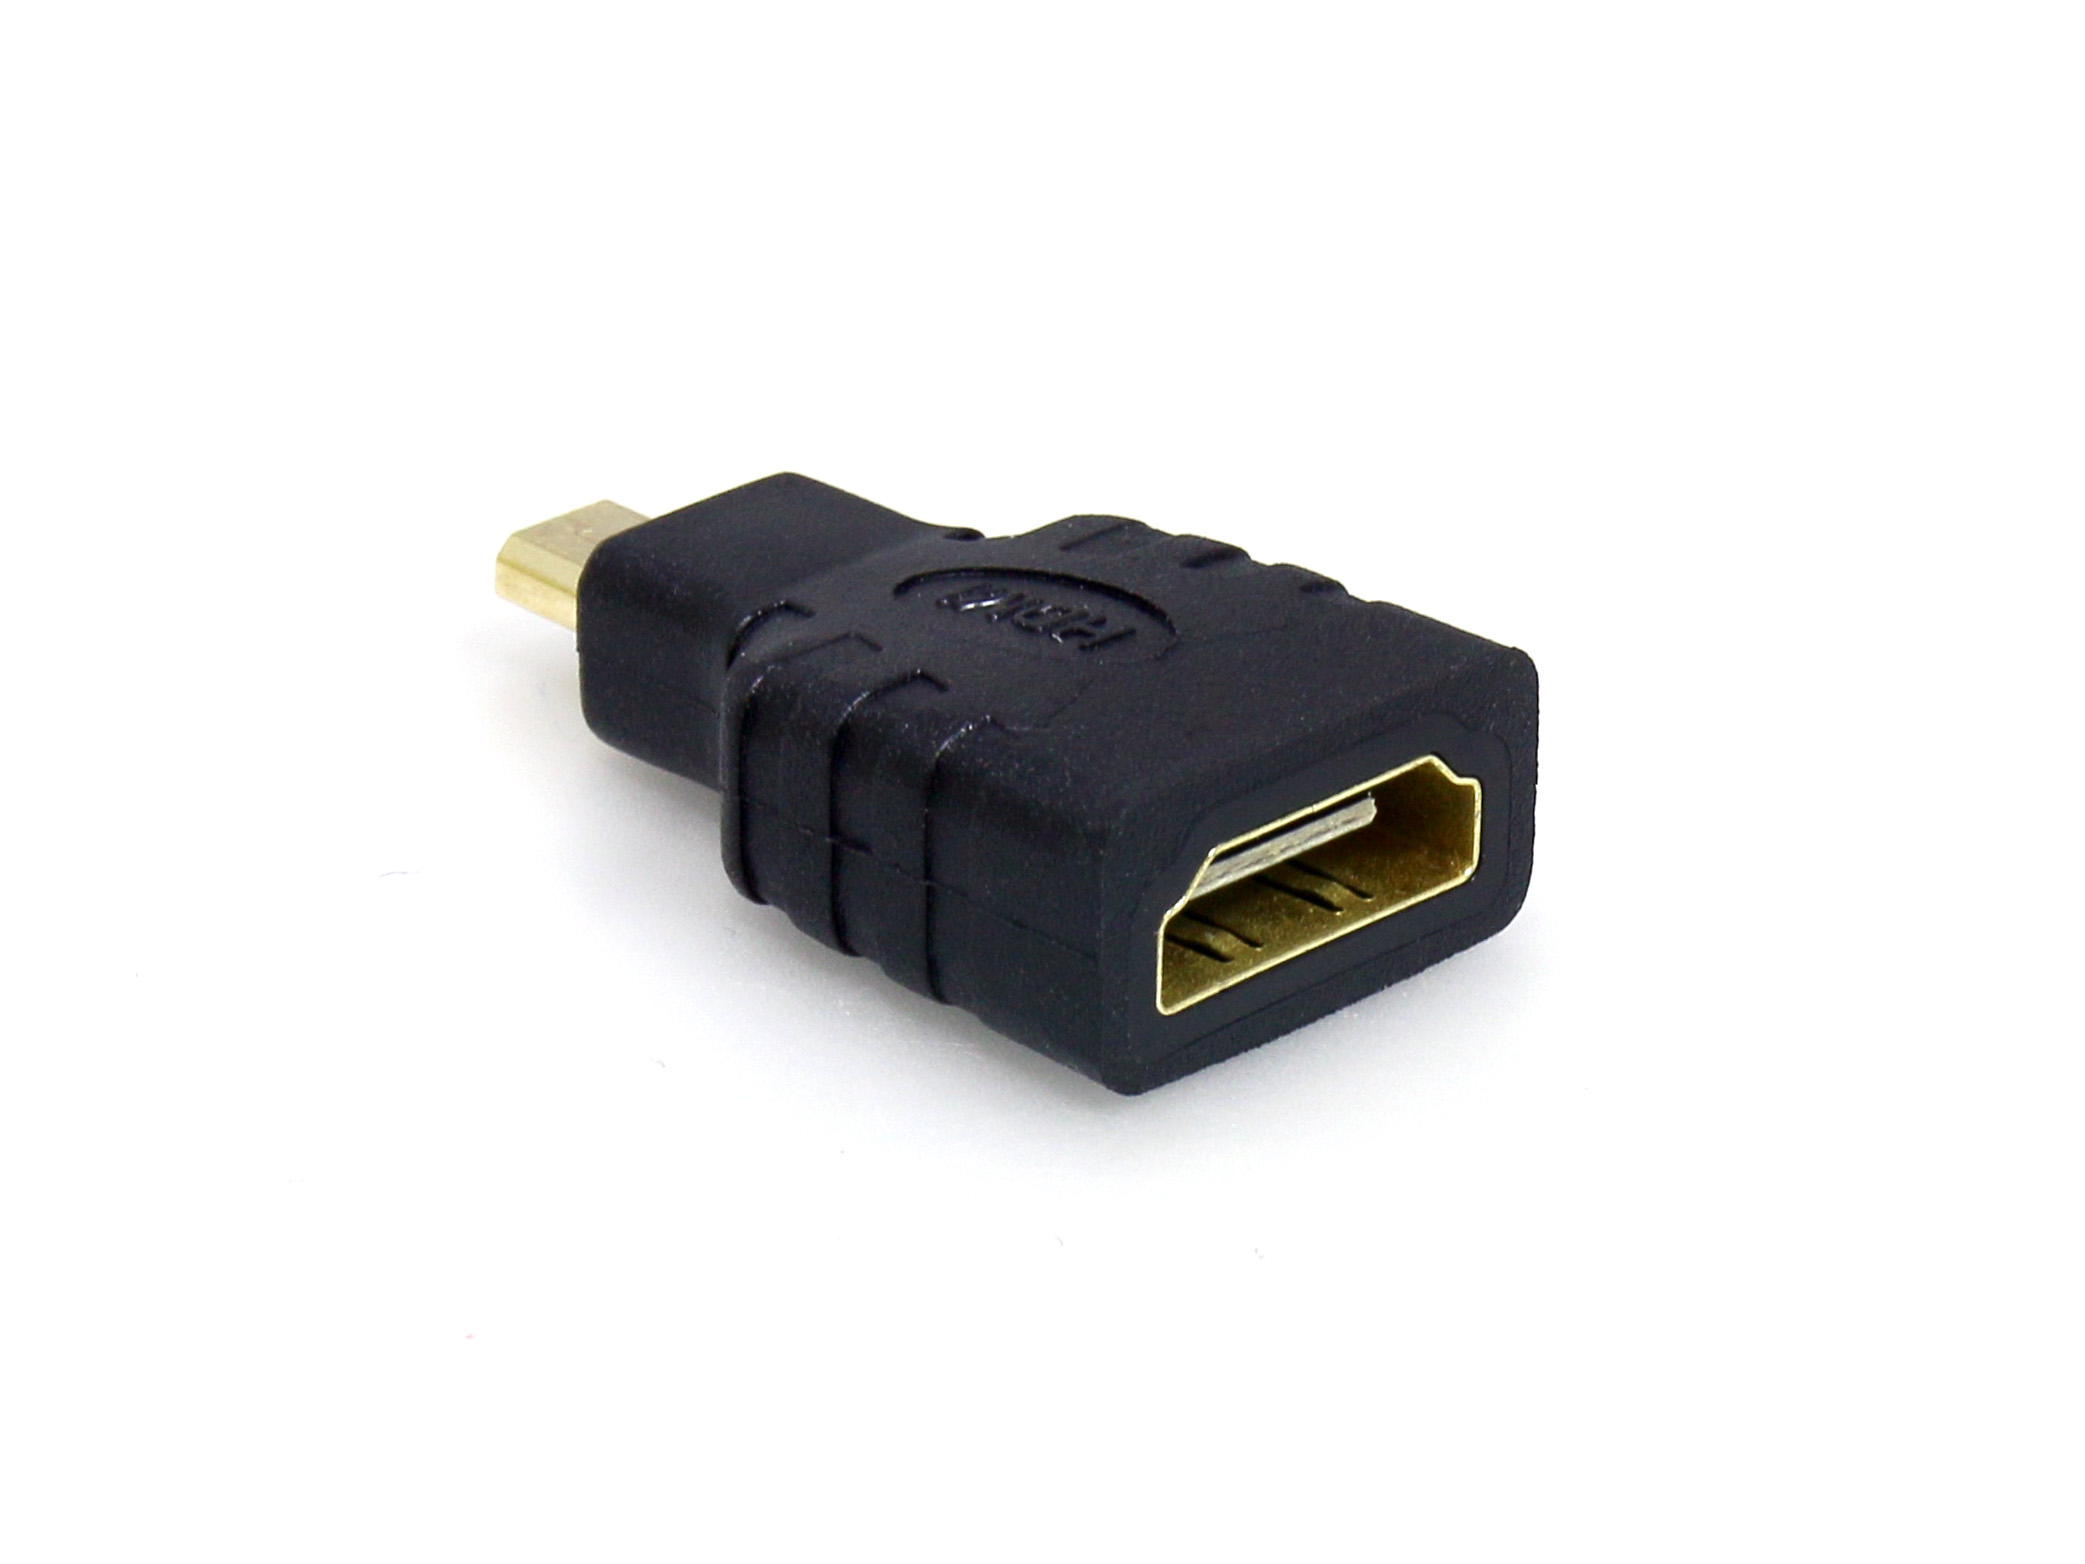 Kommunikationsnetværk ejendom højdepunkt Micro HDMI Plug to HDMI Jack Cable Adapter Dongle - Solarbotics Ltd.